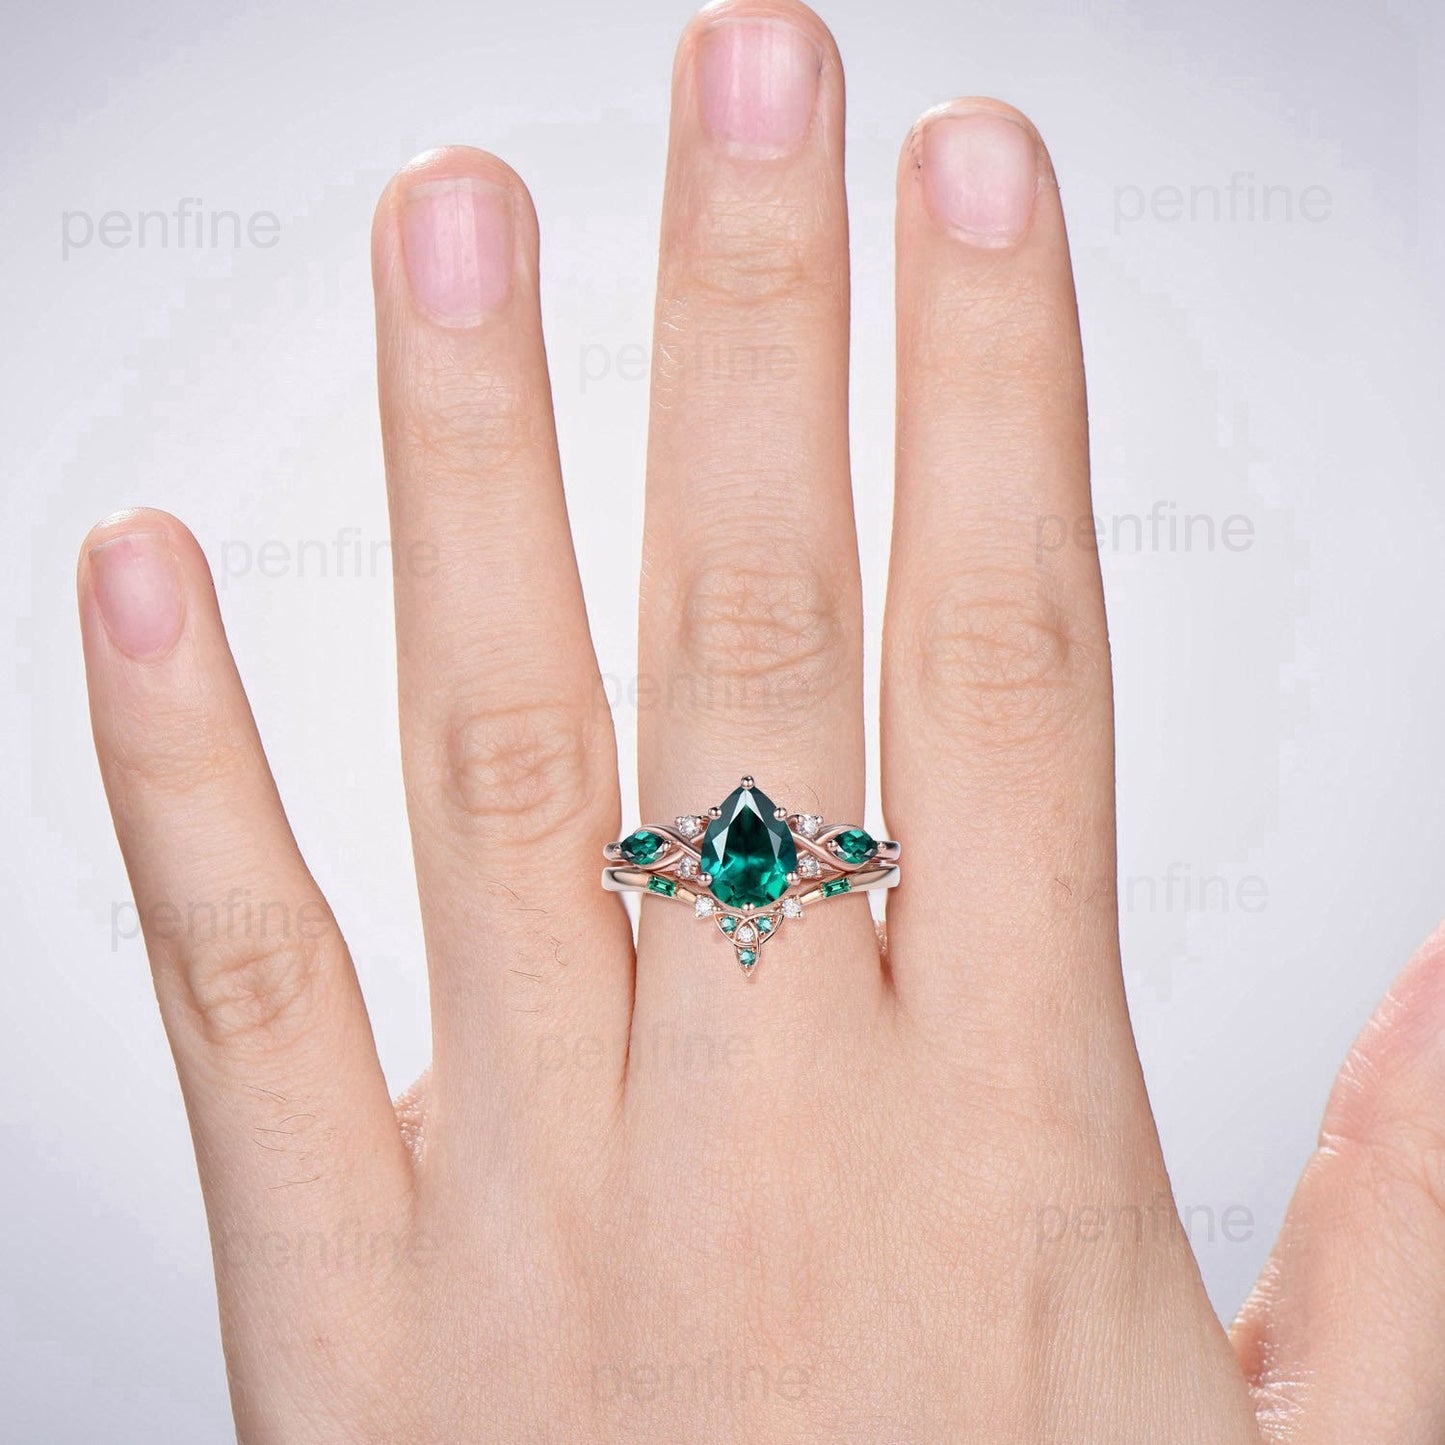 Vintage Emerald Wedding Ring Set Pear Shaped Emerald Engagement Ring Set Unique 14k Rose Gold Floral May Birthstone Bridal Ring Set Women - PENFINE